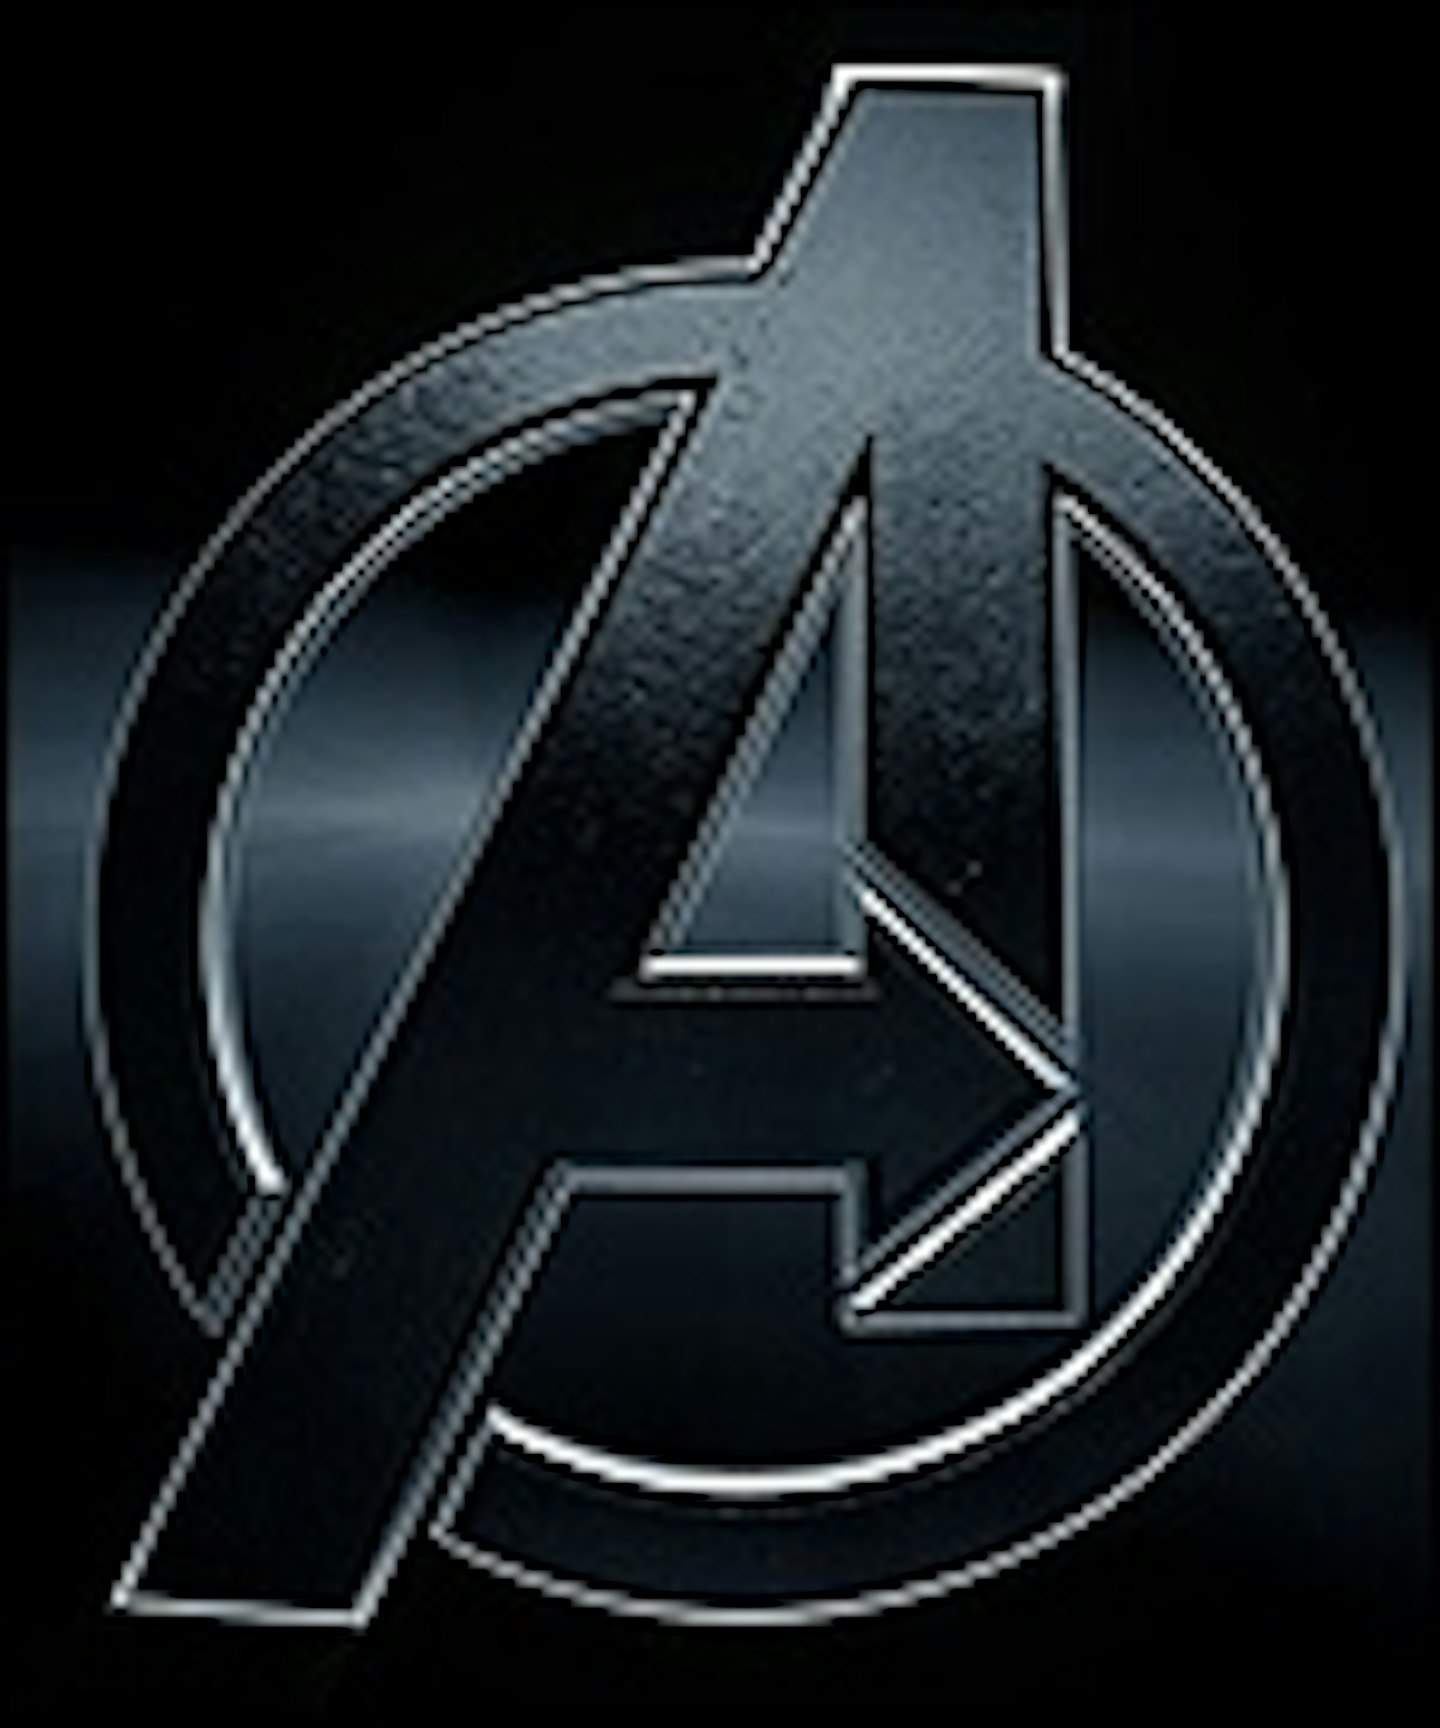 Avengers: Age Of Ultron Comic-Con Teaser Lands Online